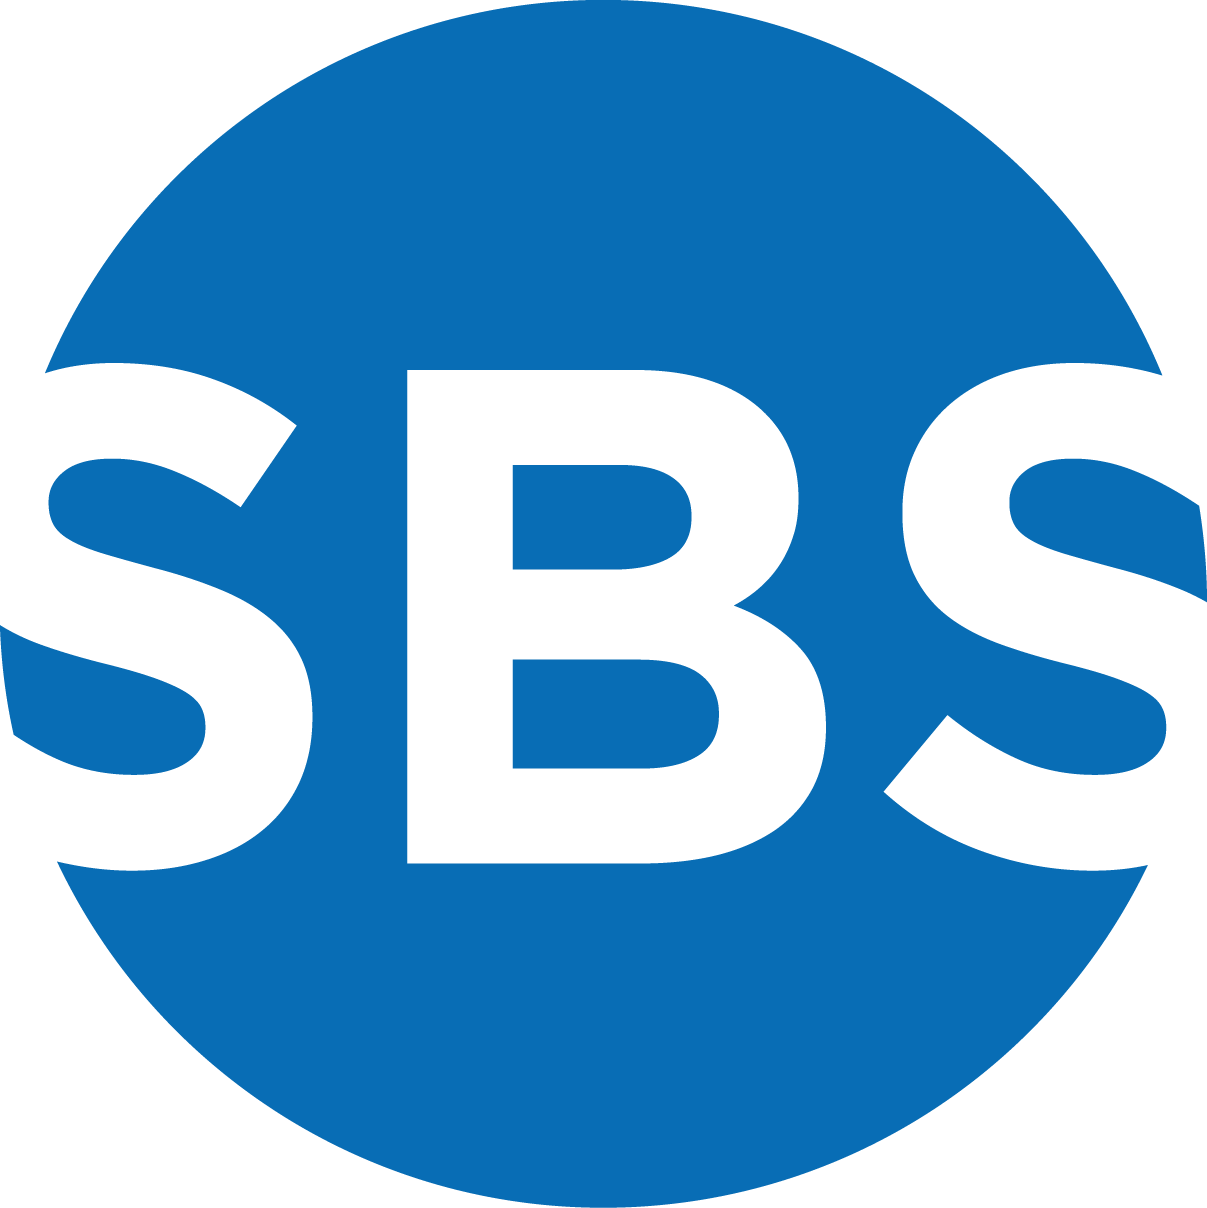 SBS Simon i Blanco SLP